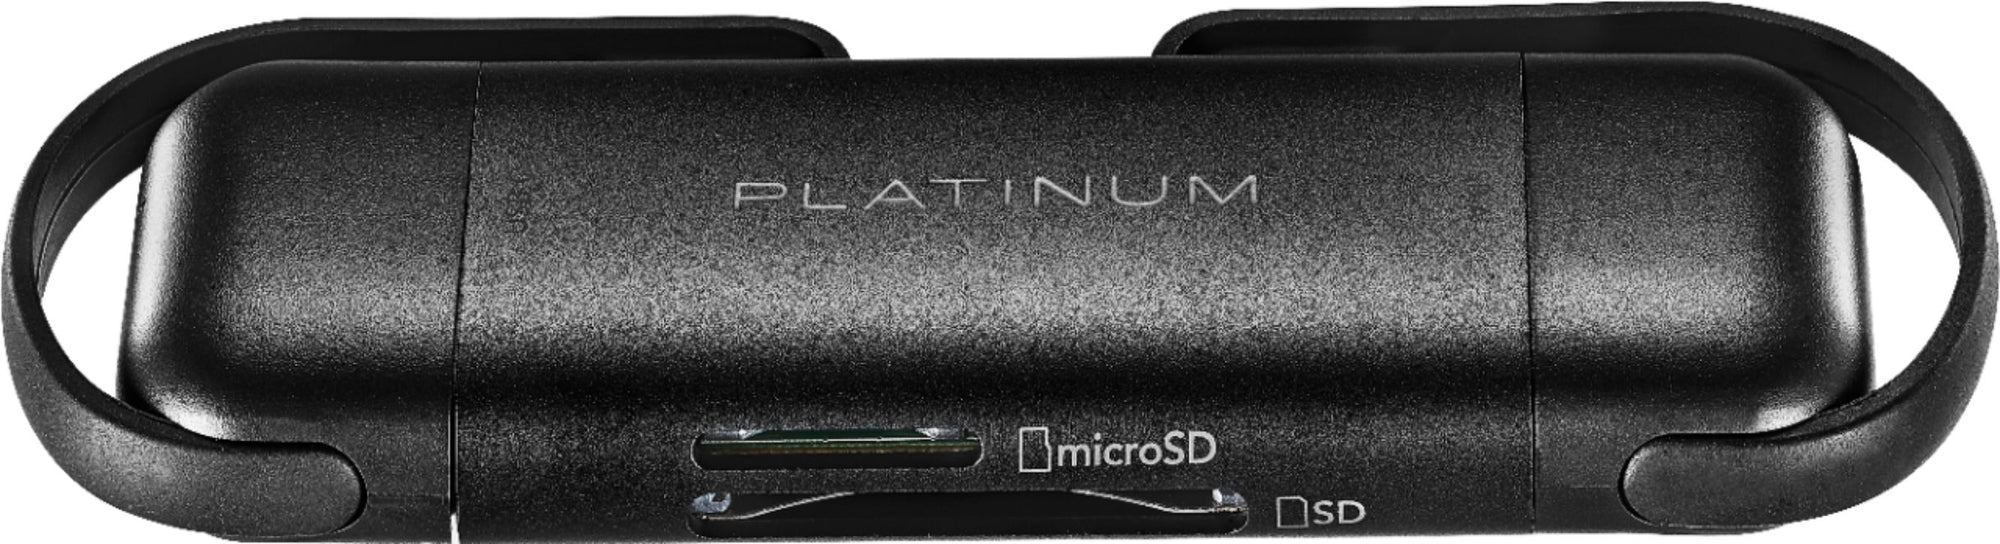 Platinum™ - PT-CRSAC1 UHS-I USB-C/USB 3.2 Gen 1 Memory Card Reader - Black